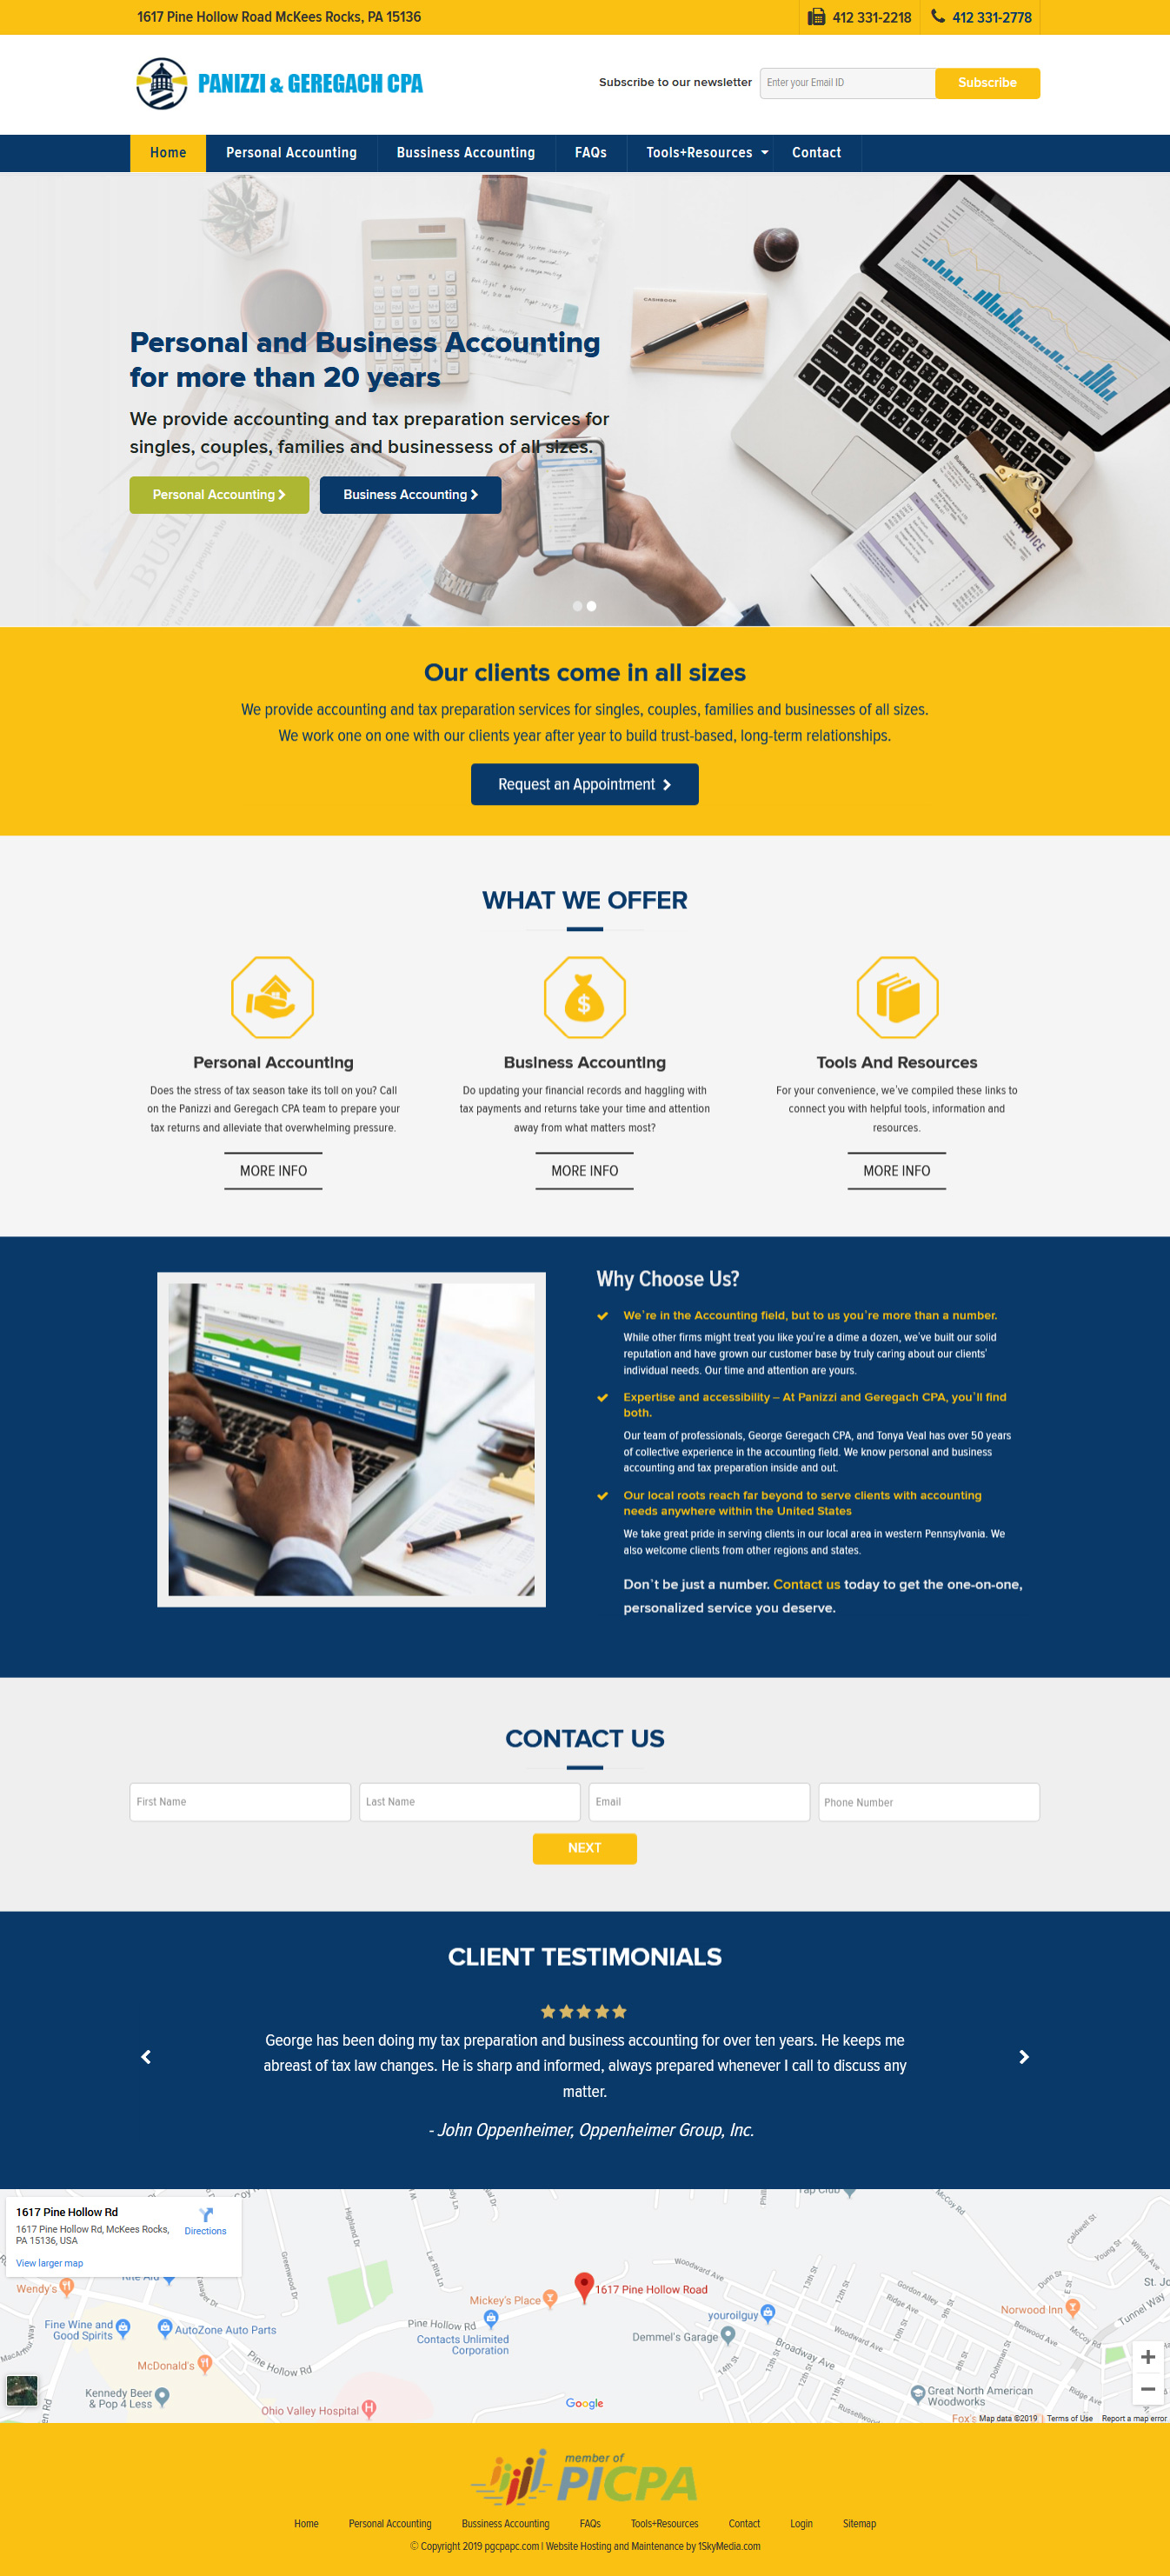  Panizzi and Geregach CPA accountants website design